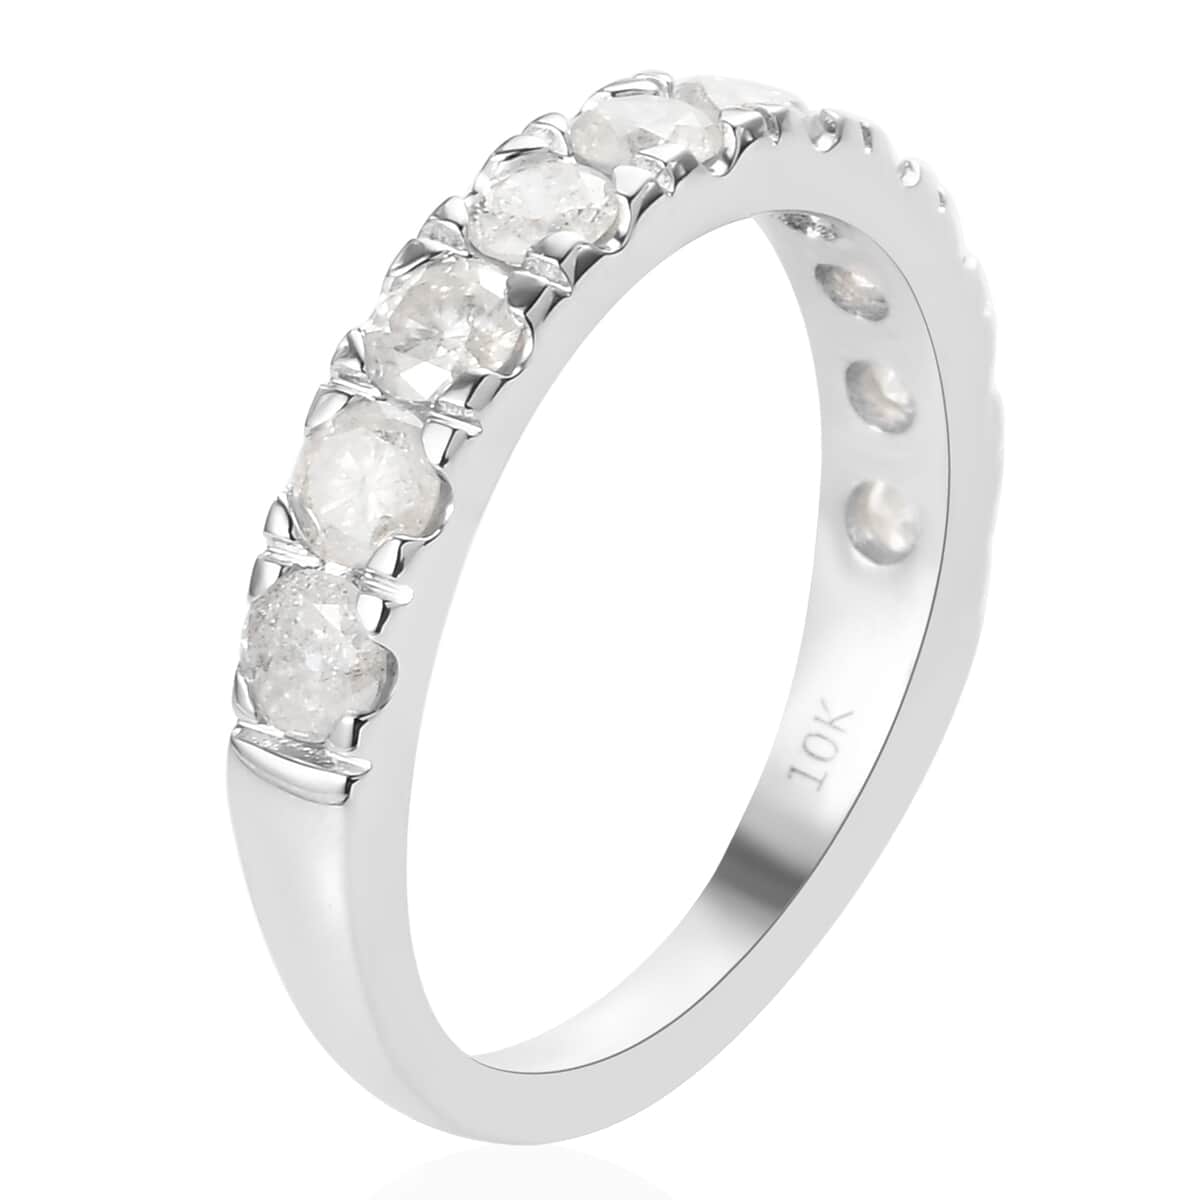 LUXORO 10K White Gold Diamond G-H I2 Band Ring (Size 6.0) 2.50 Grams 1.00 ctw image number 3